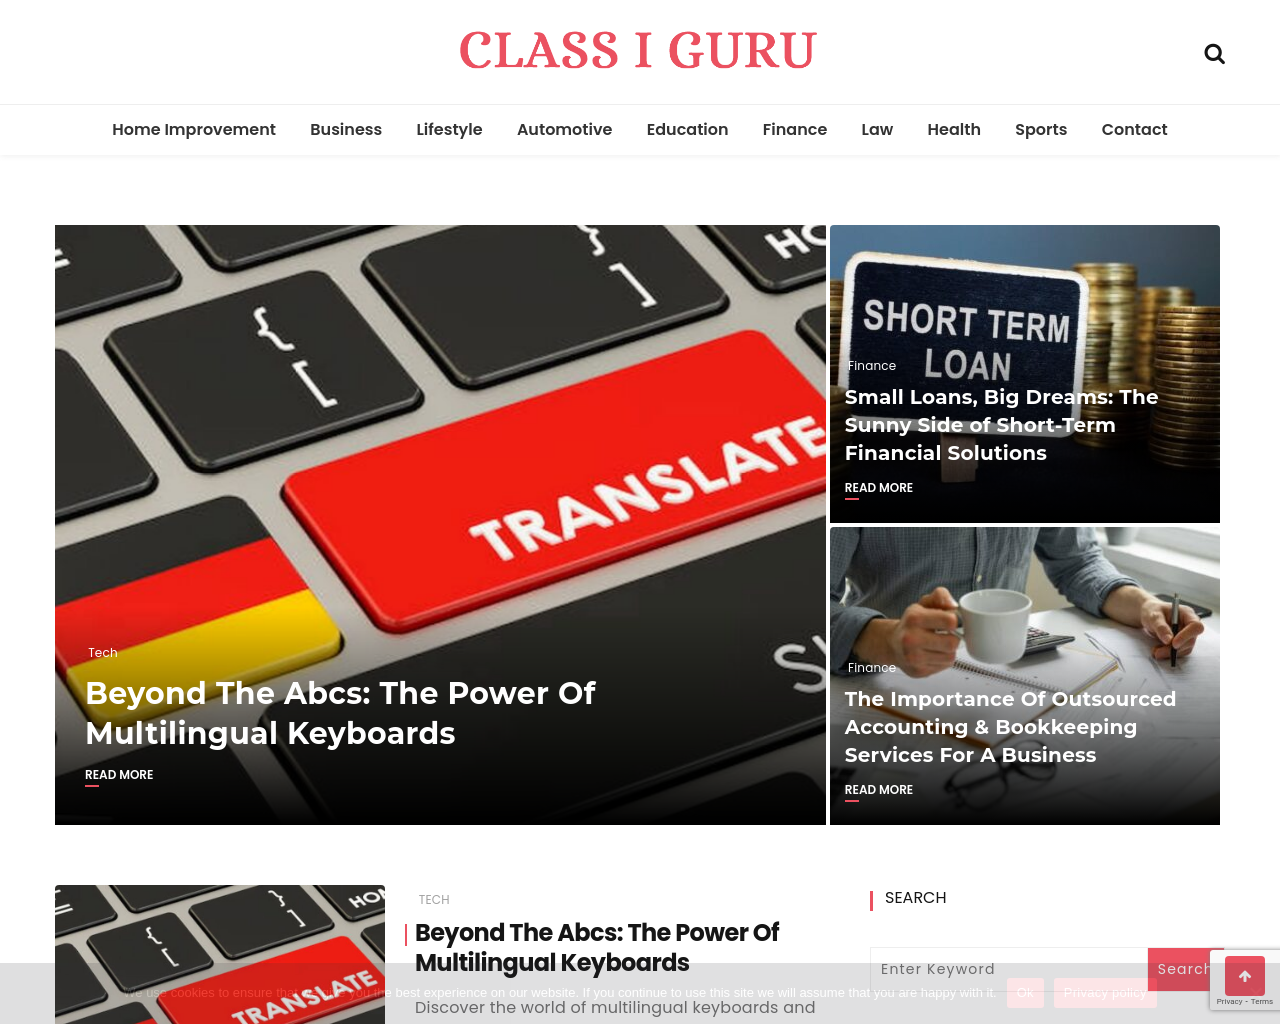 classiguru.com